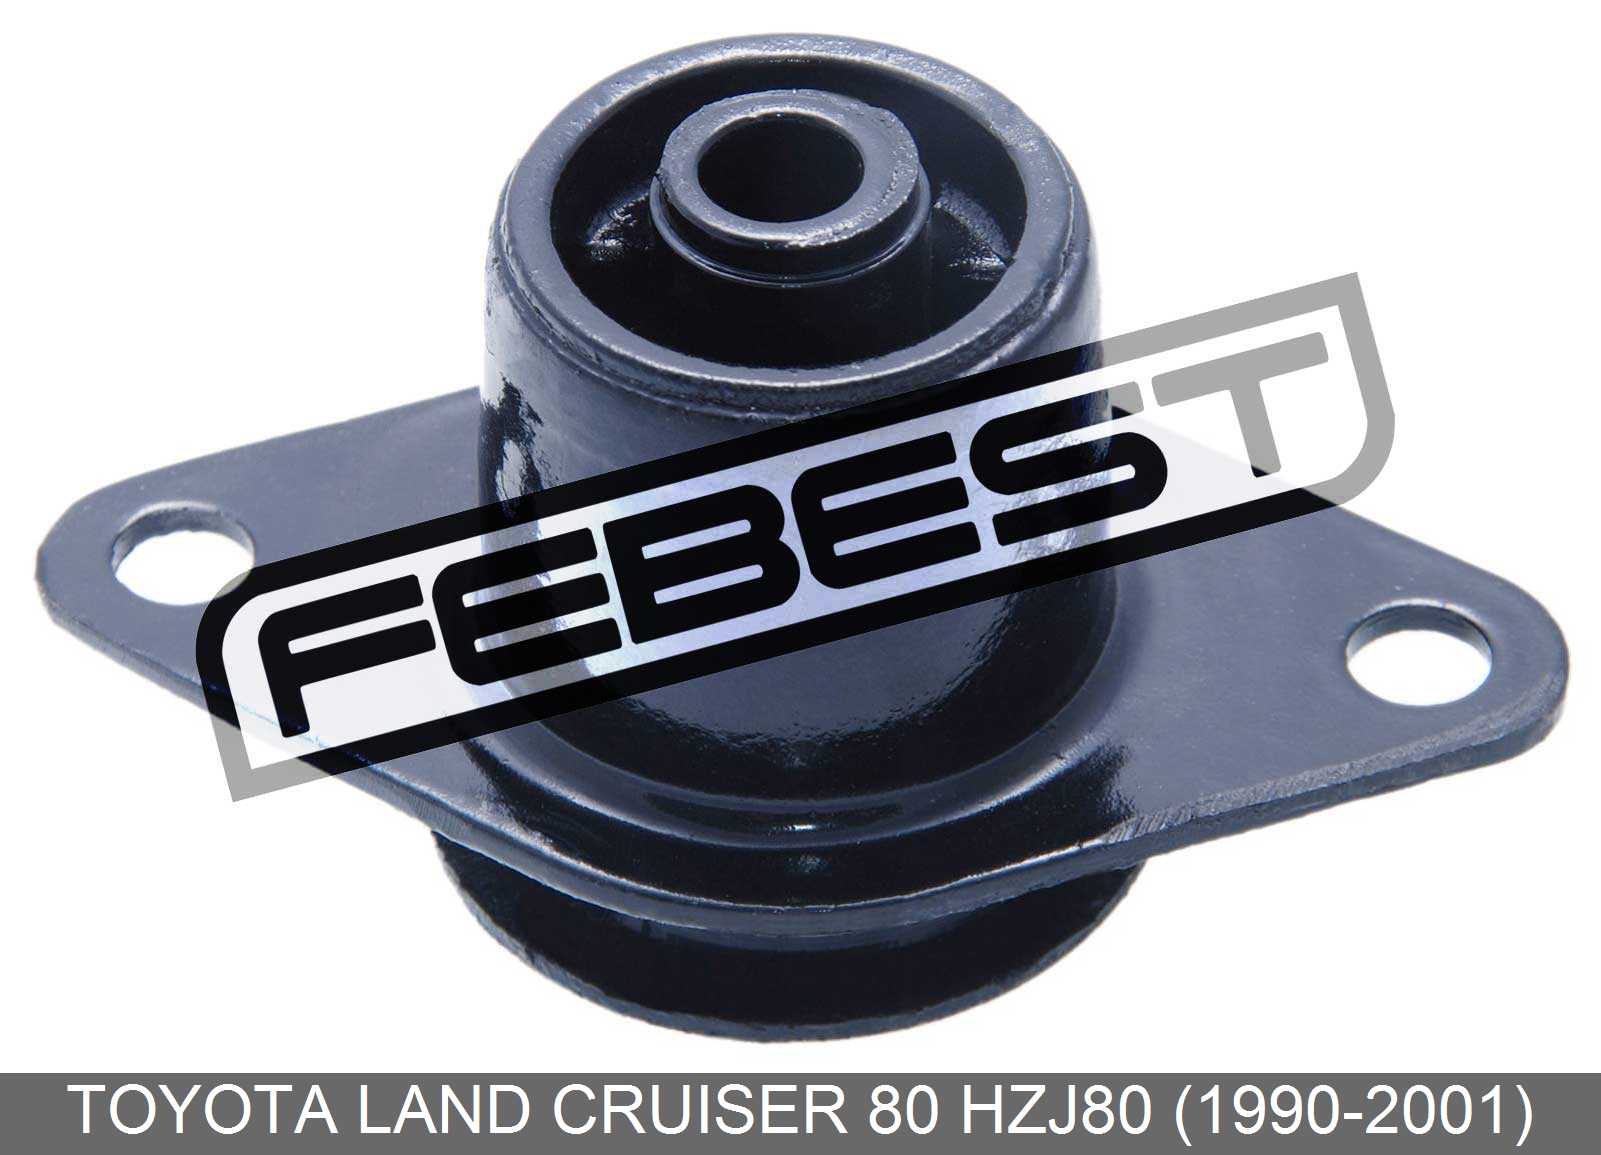 Body Bushing For Toyota Land Cruiser 80 Fzj80 1990-2001